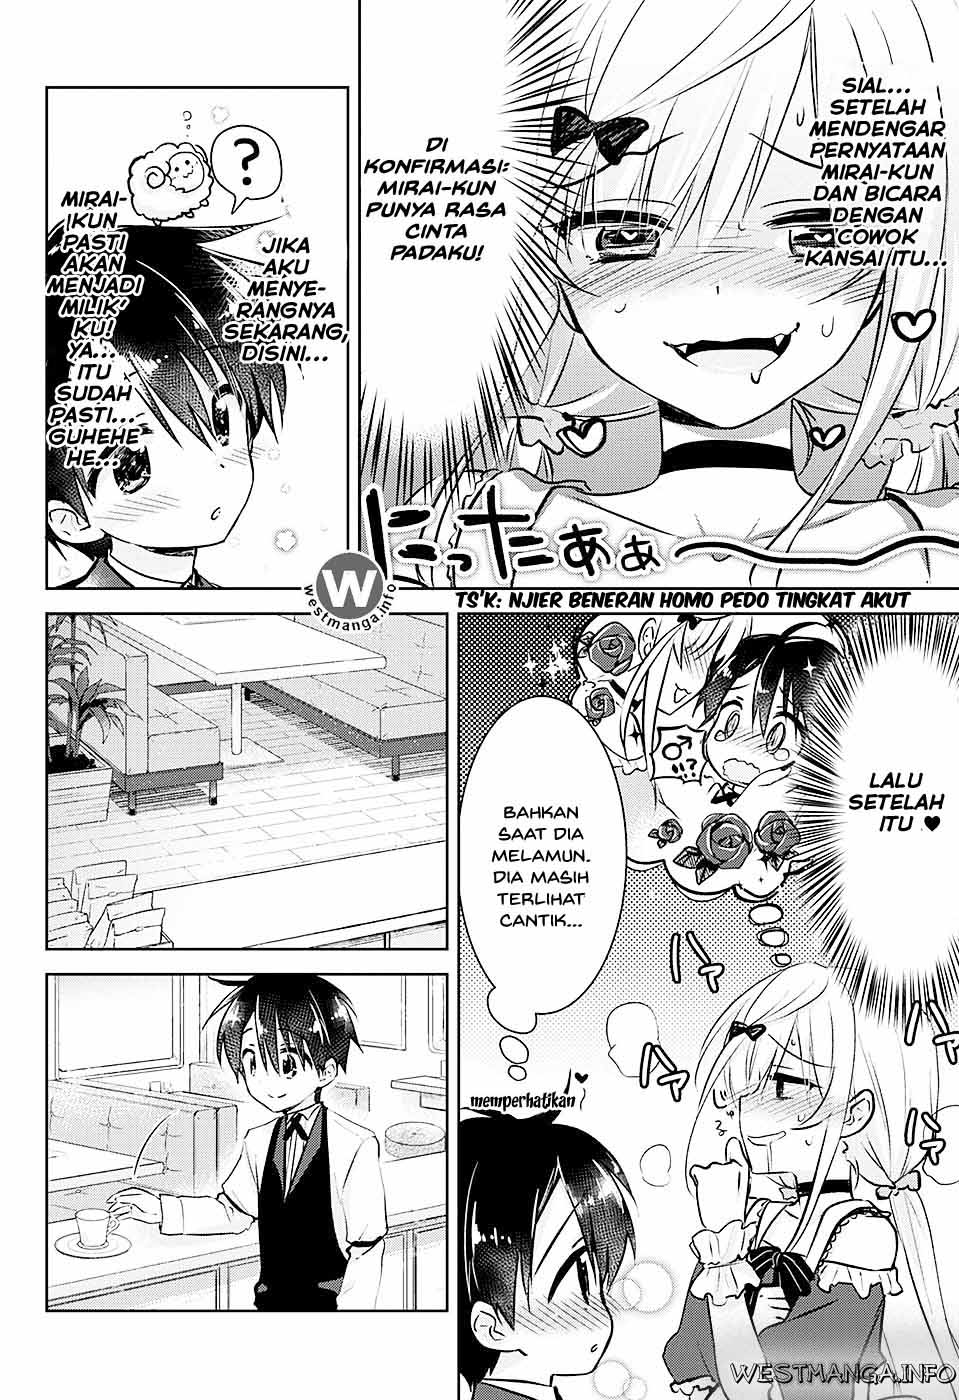 YugaMira Chapter 1-End Gambar 16